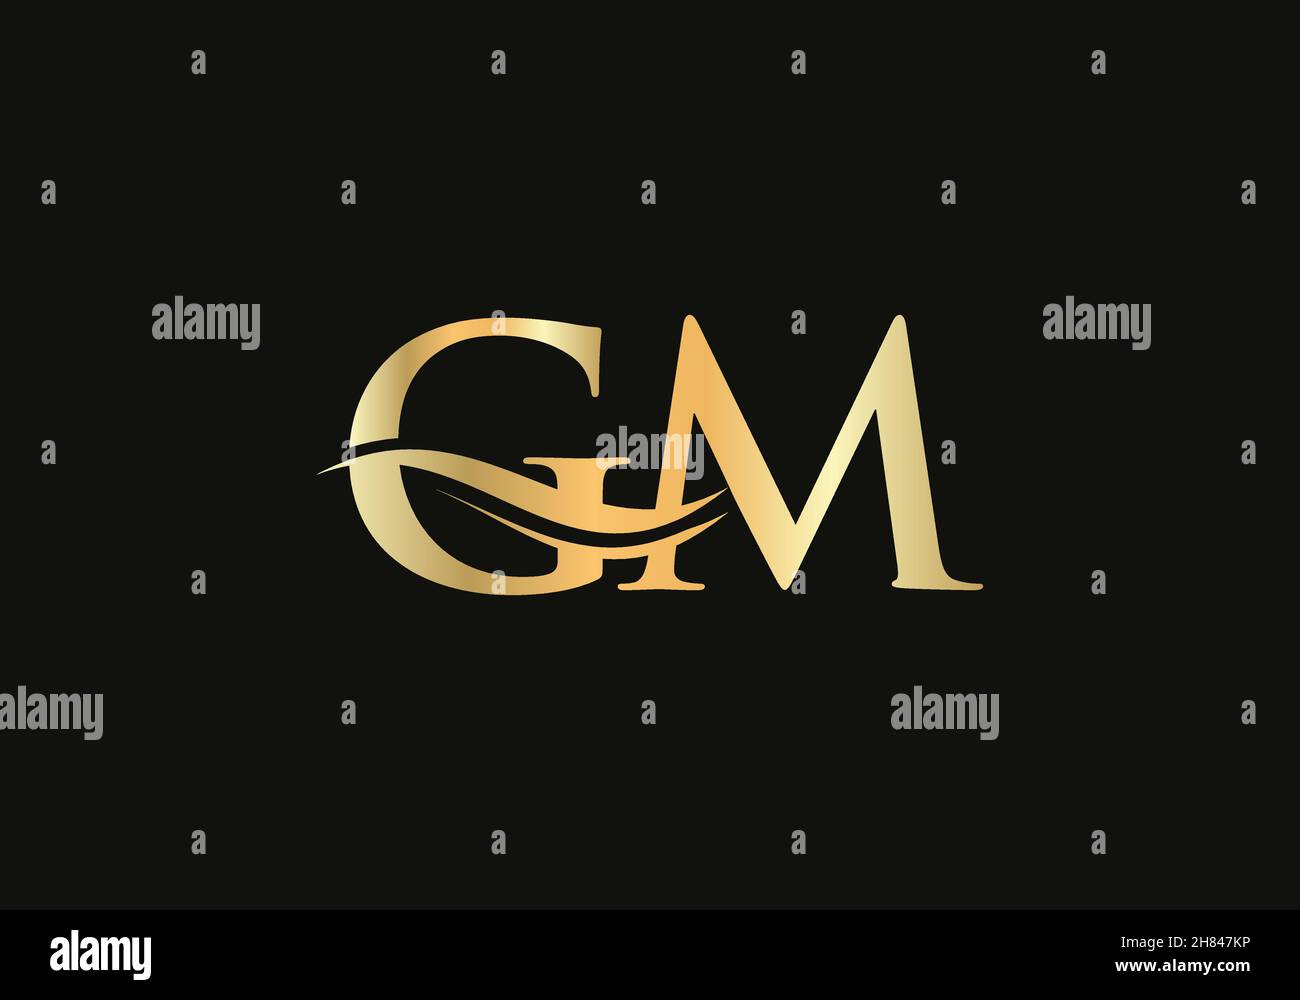 6,071 Gm Logo Images, Stock Photos, 3D objects, & Vectors